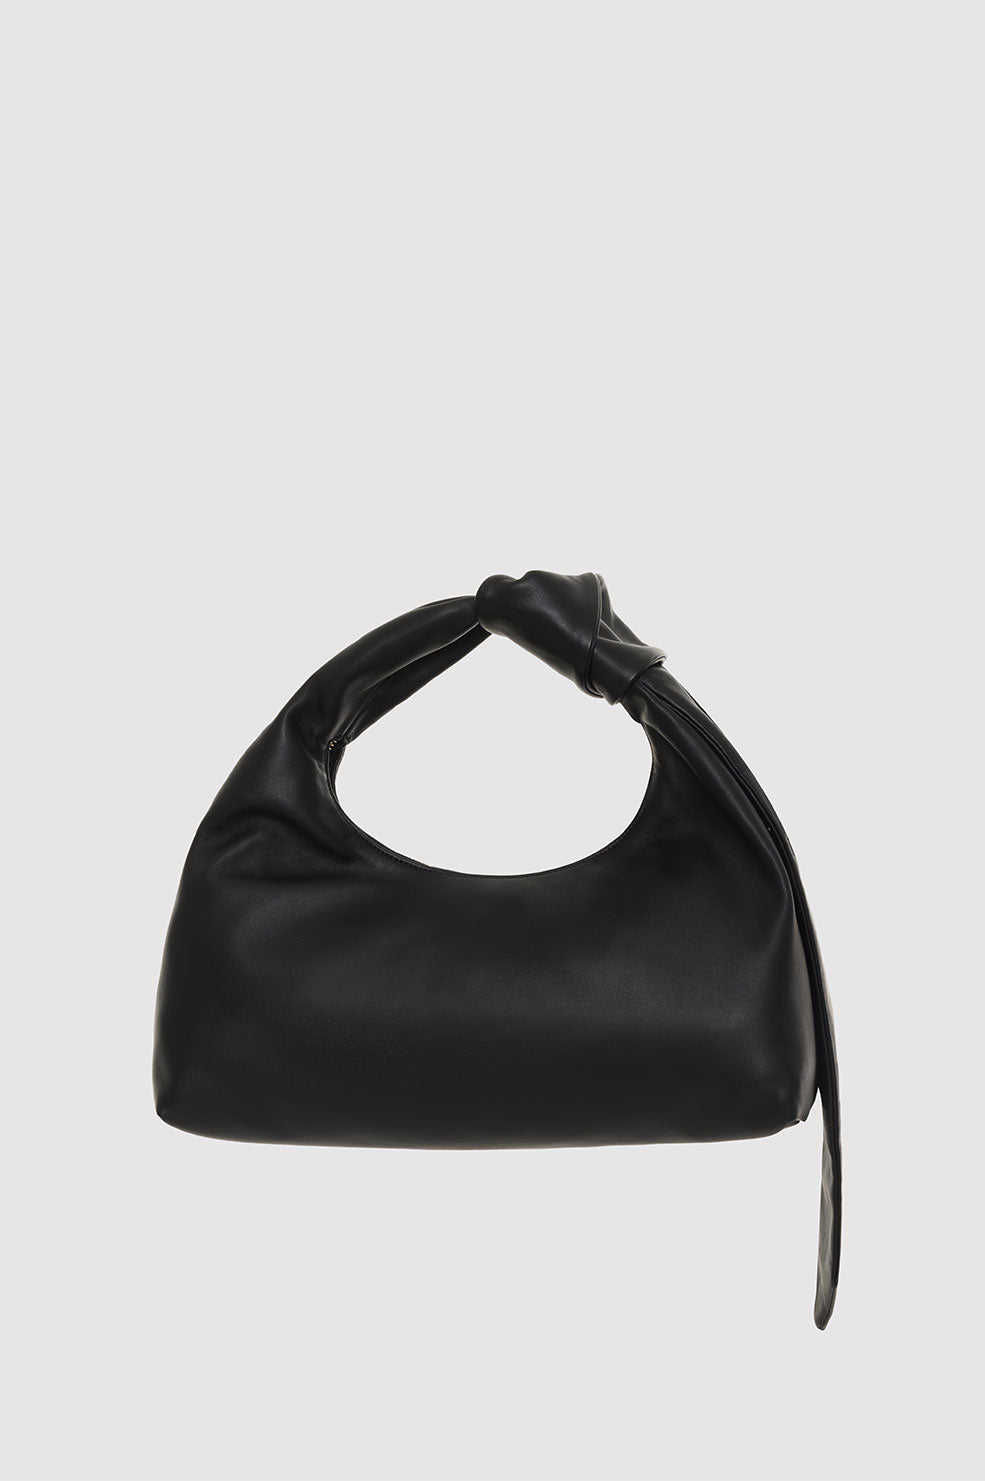 Key Bell XL Fashion Leather - Handbags